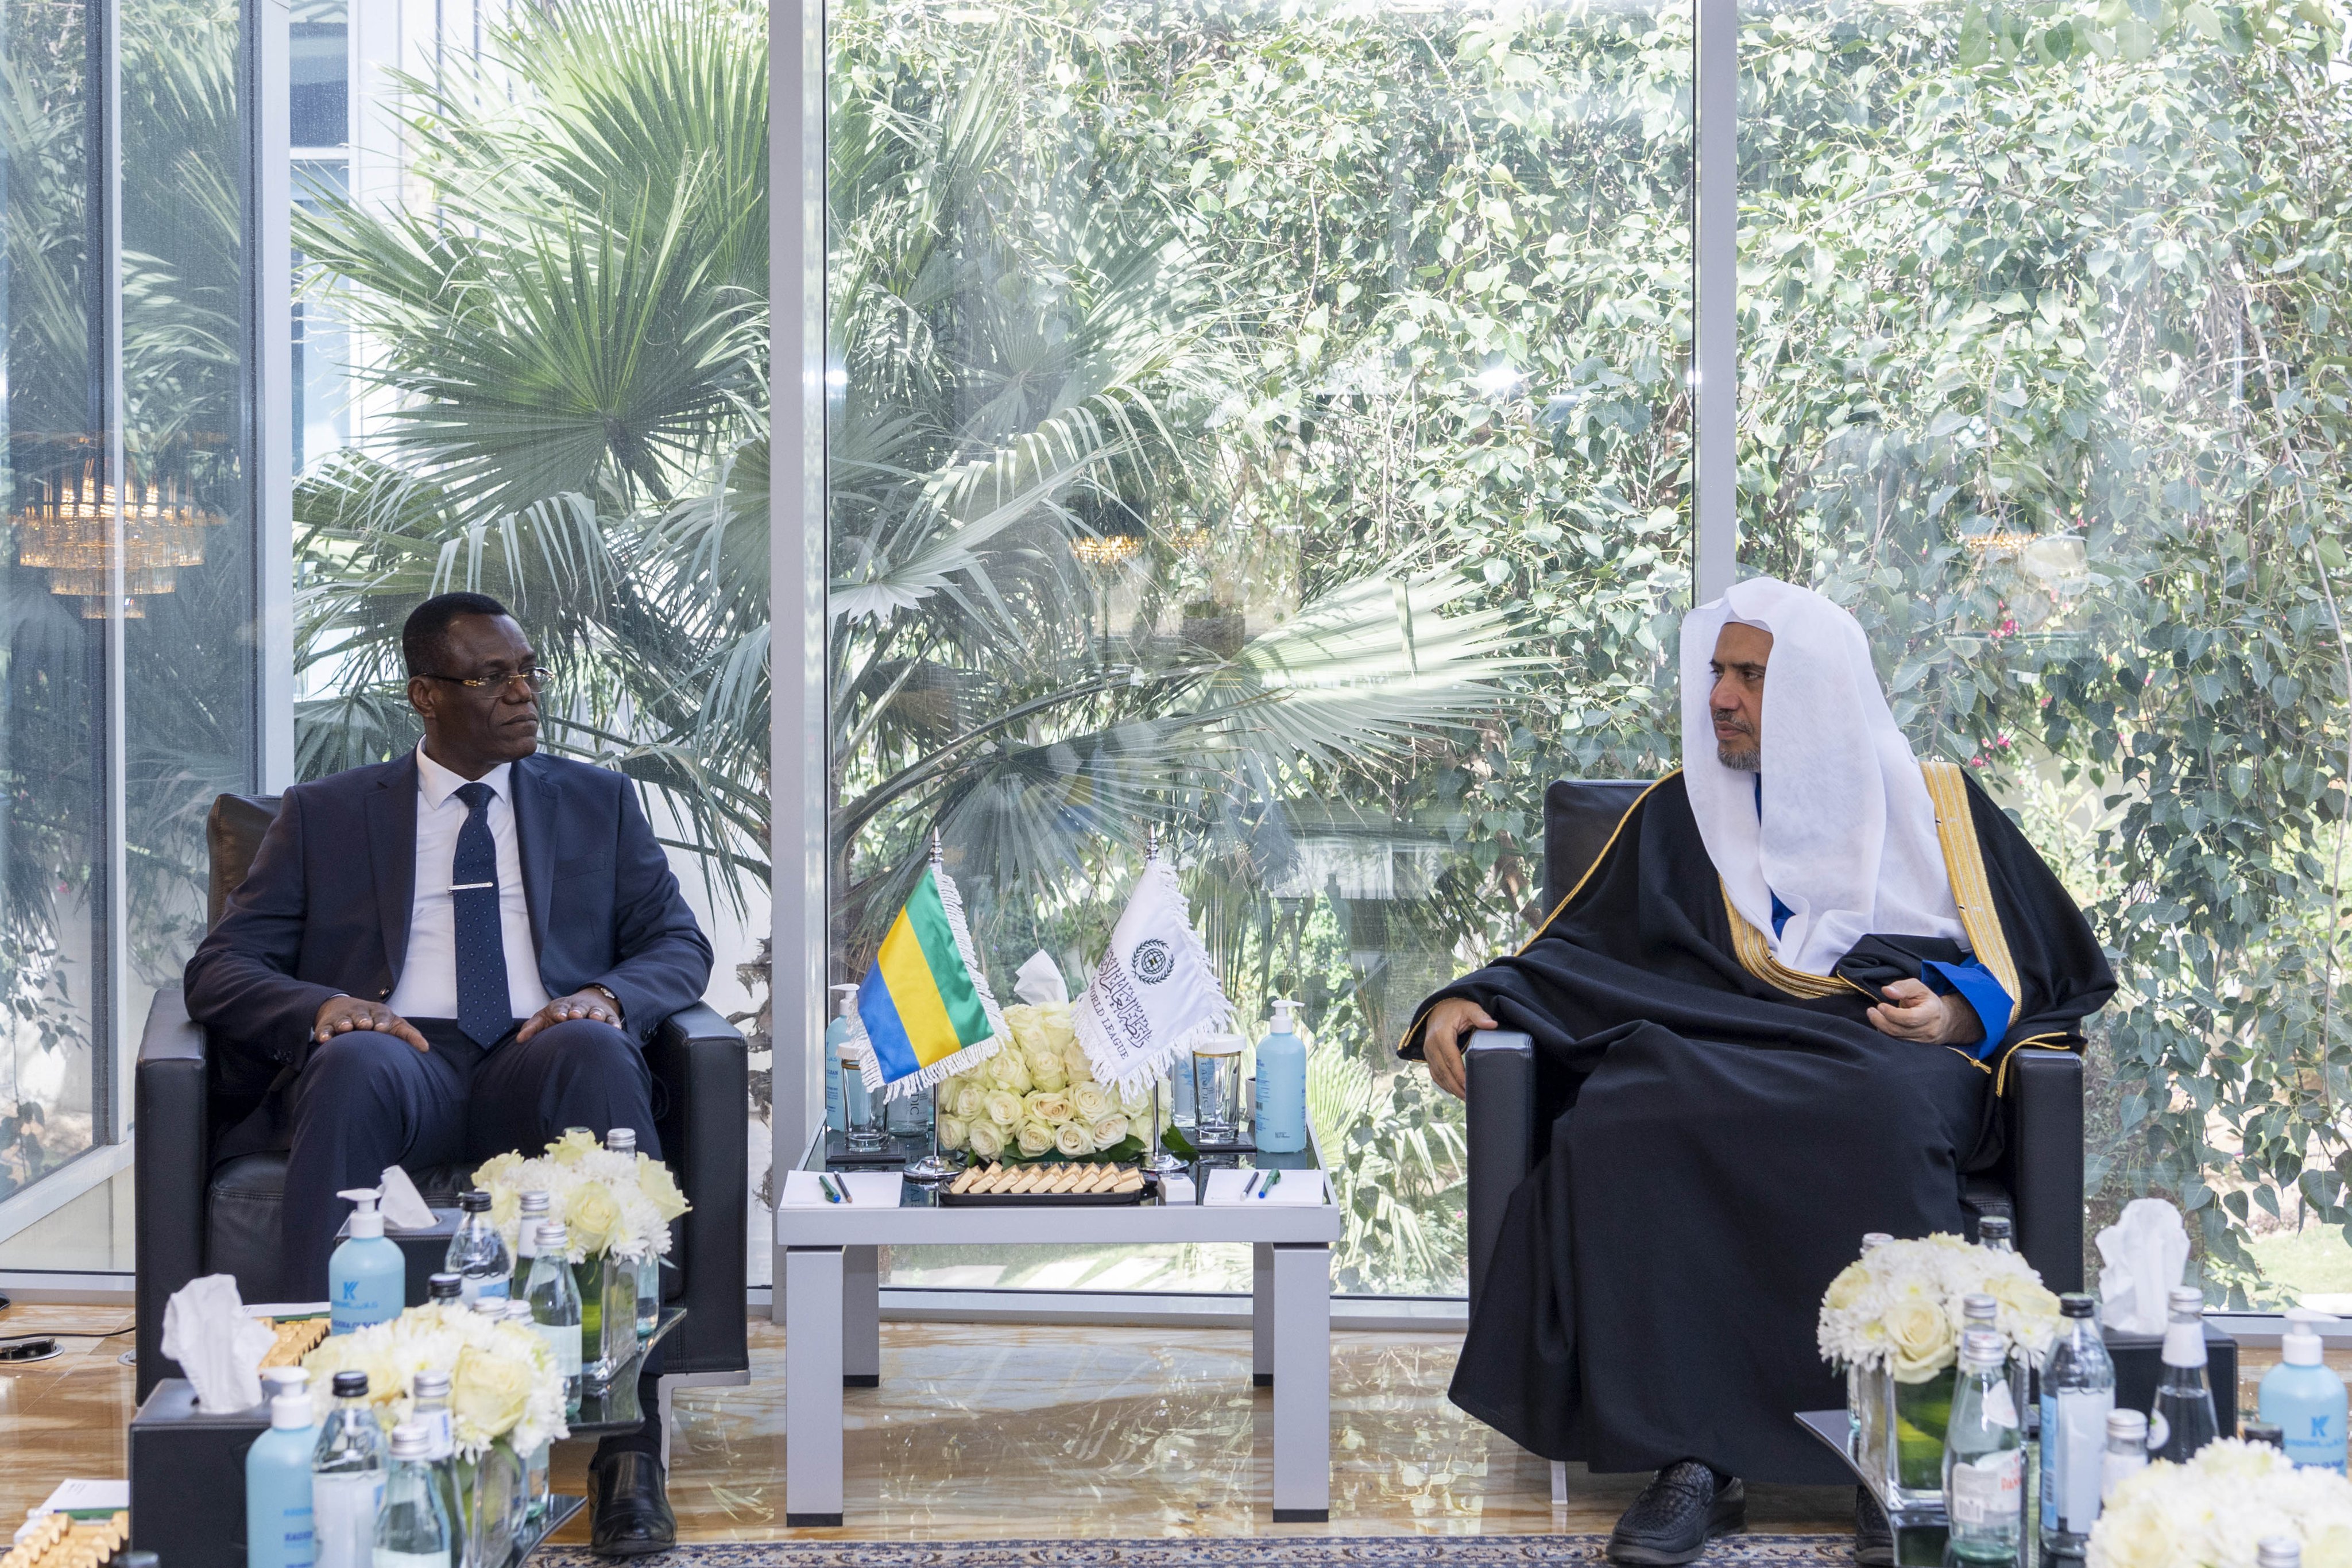 H.E. Dr. Mohammad Alissa met with the Ambassador of the Republic of Gabon to the Kingdom of Saudi Arabia, H.E. Guy Ibrahim Mamborou